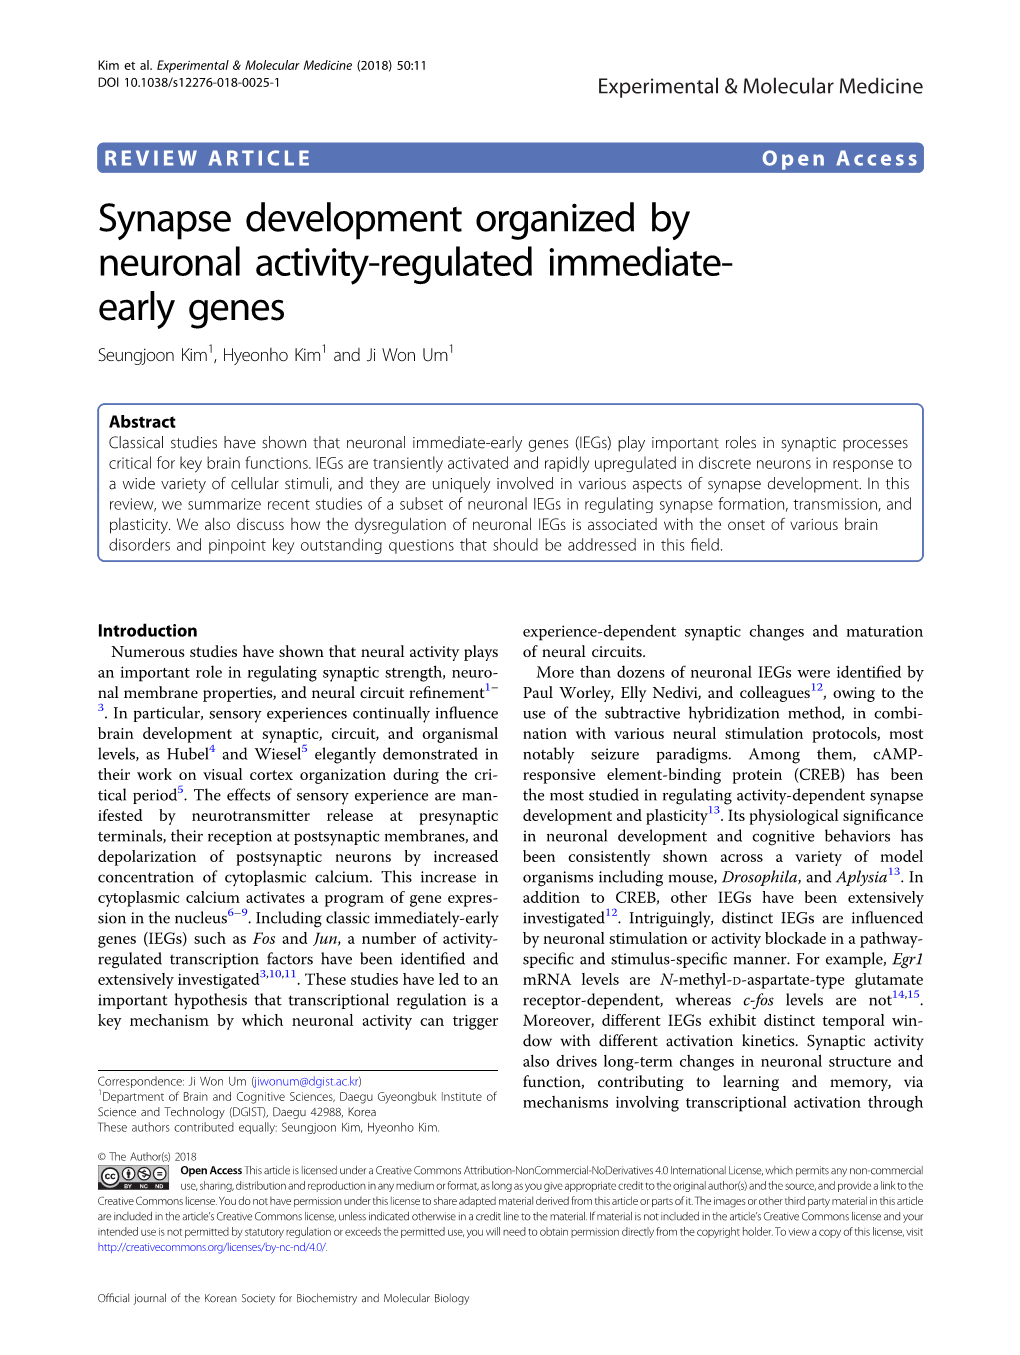 Synapse Development Organized by Neuronal Activity-Regulated Immediate- Early Genes Seungjoon Kim1, Hyeonho Kim1 and Ji Won Um1